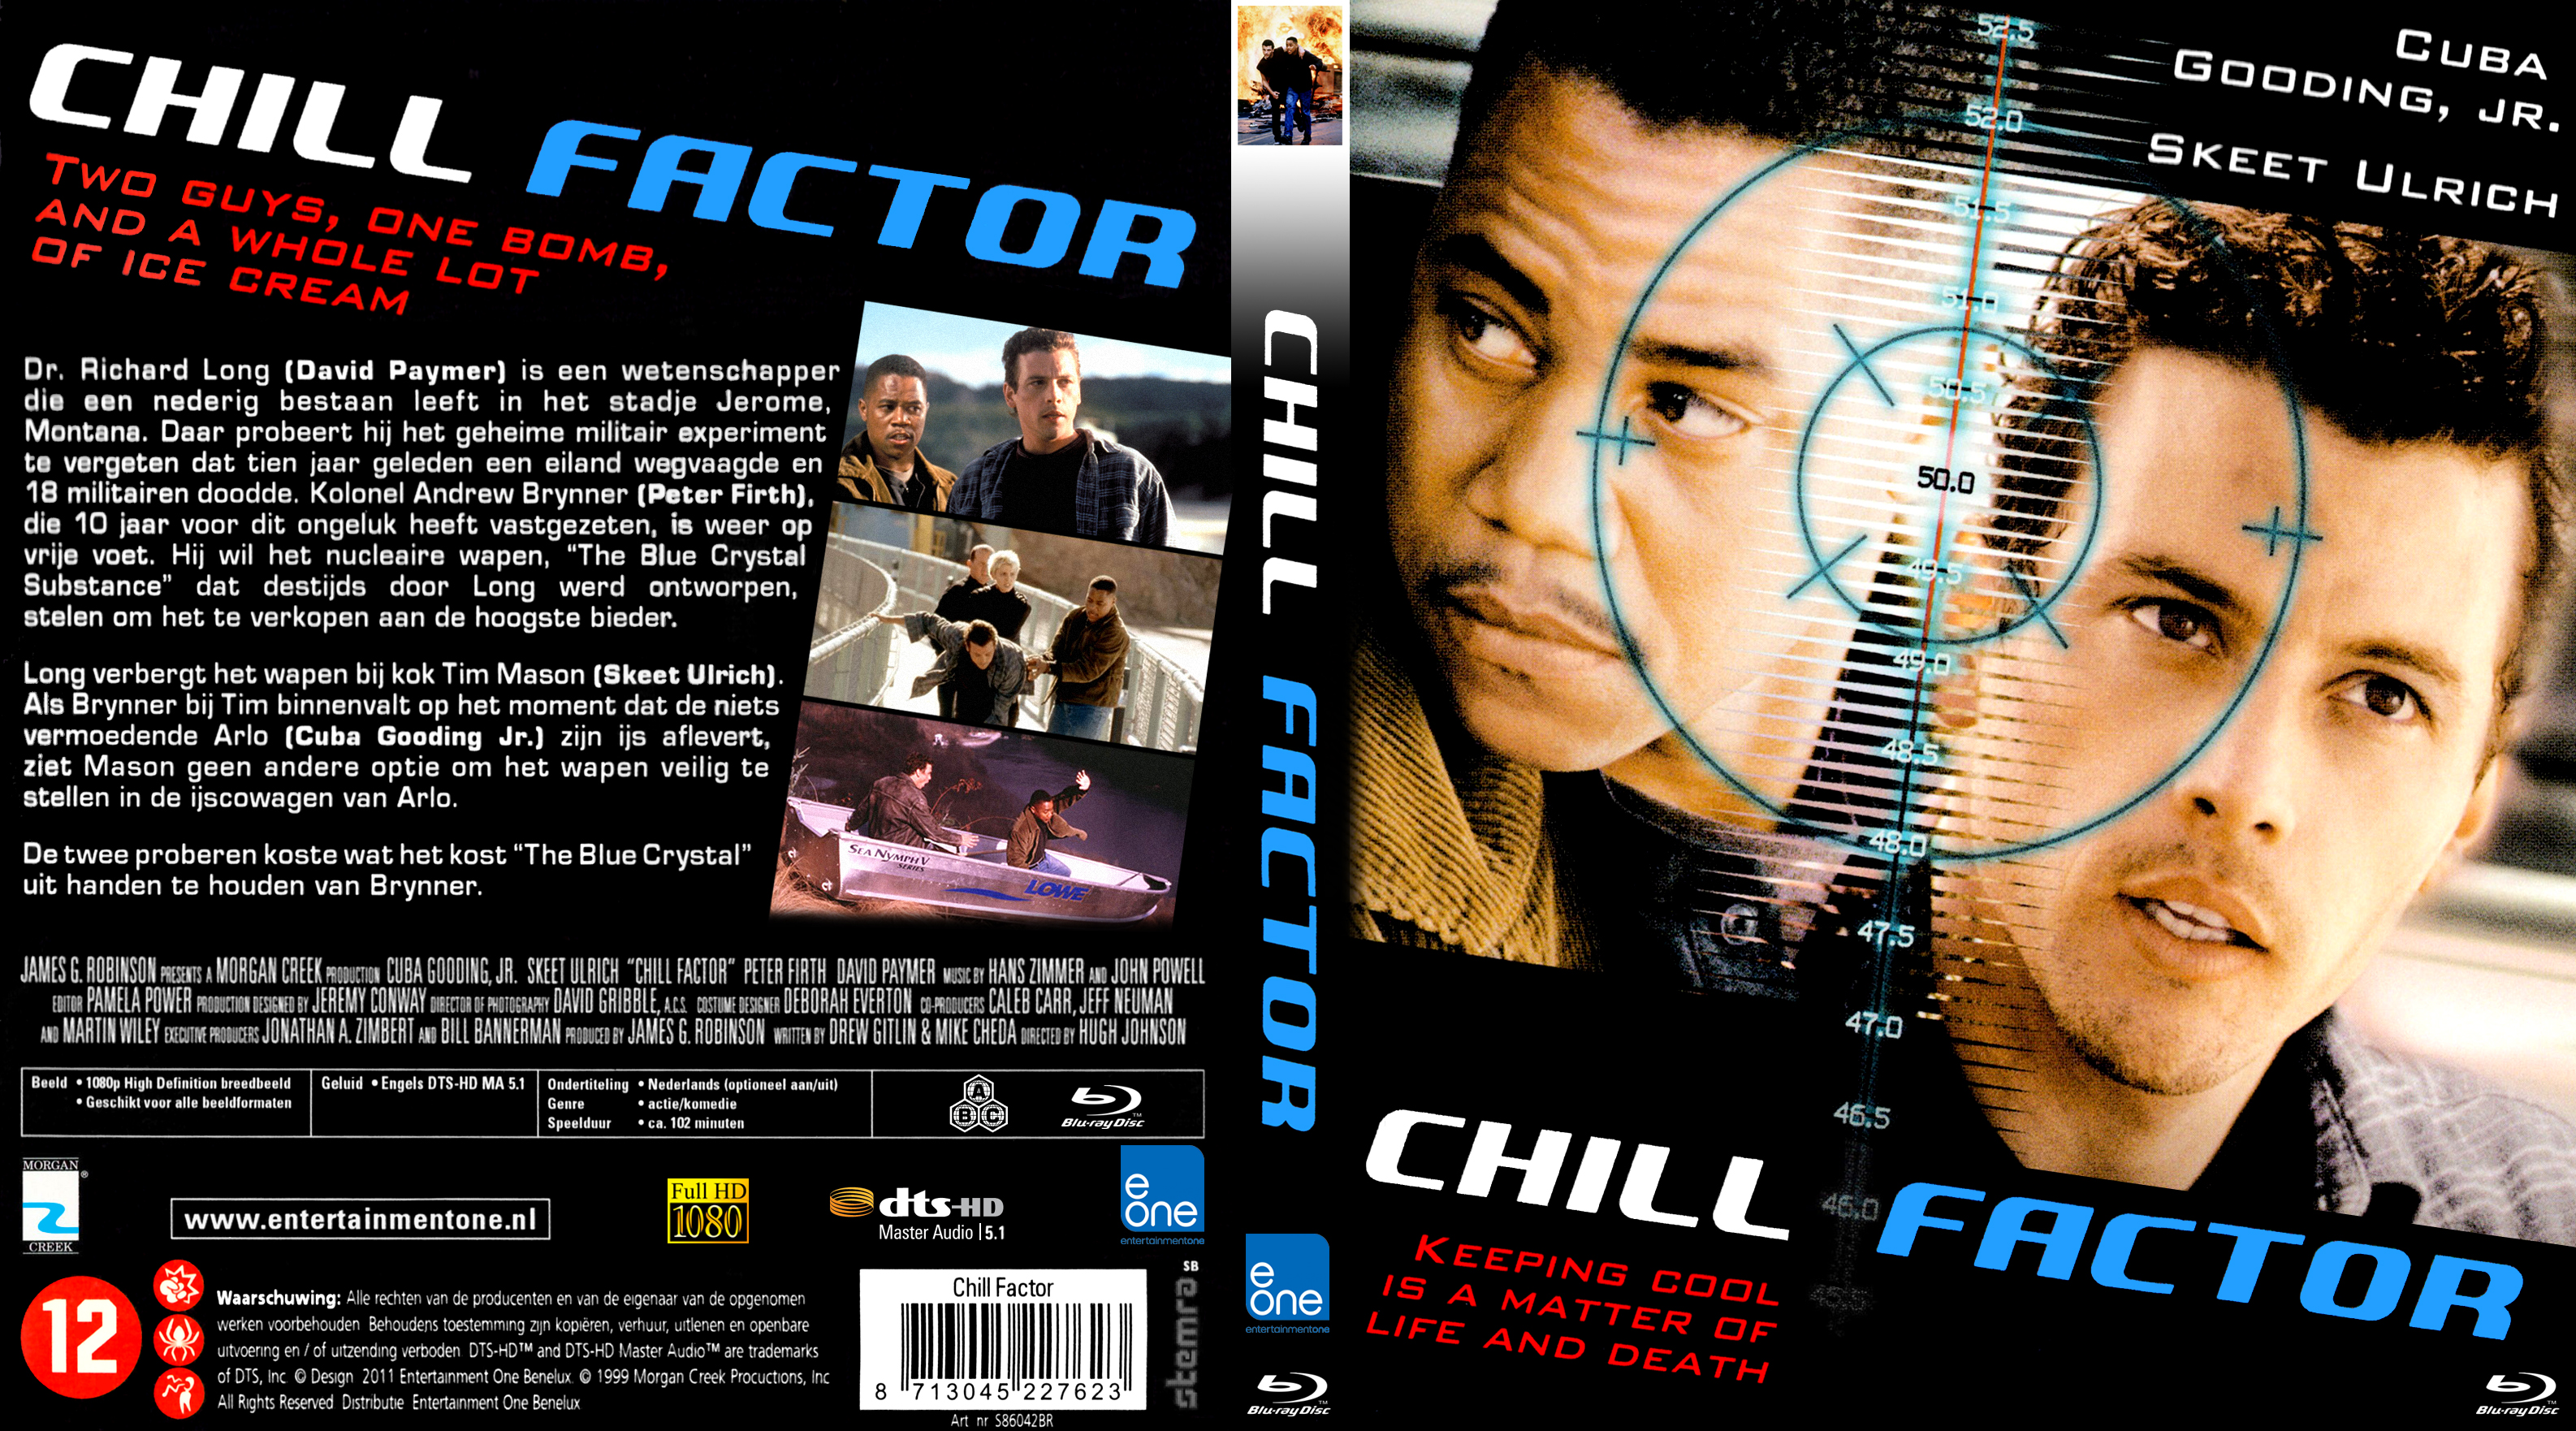 Jaquette DVD Chill Factor - 50 degres fahrenheit Zone 1 (BLU-RAY)